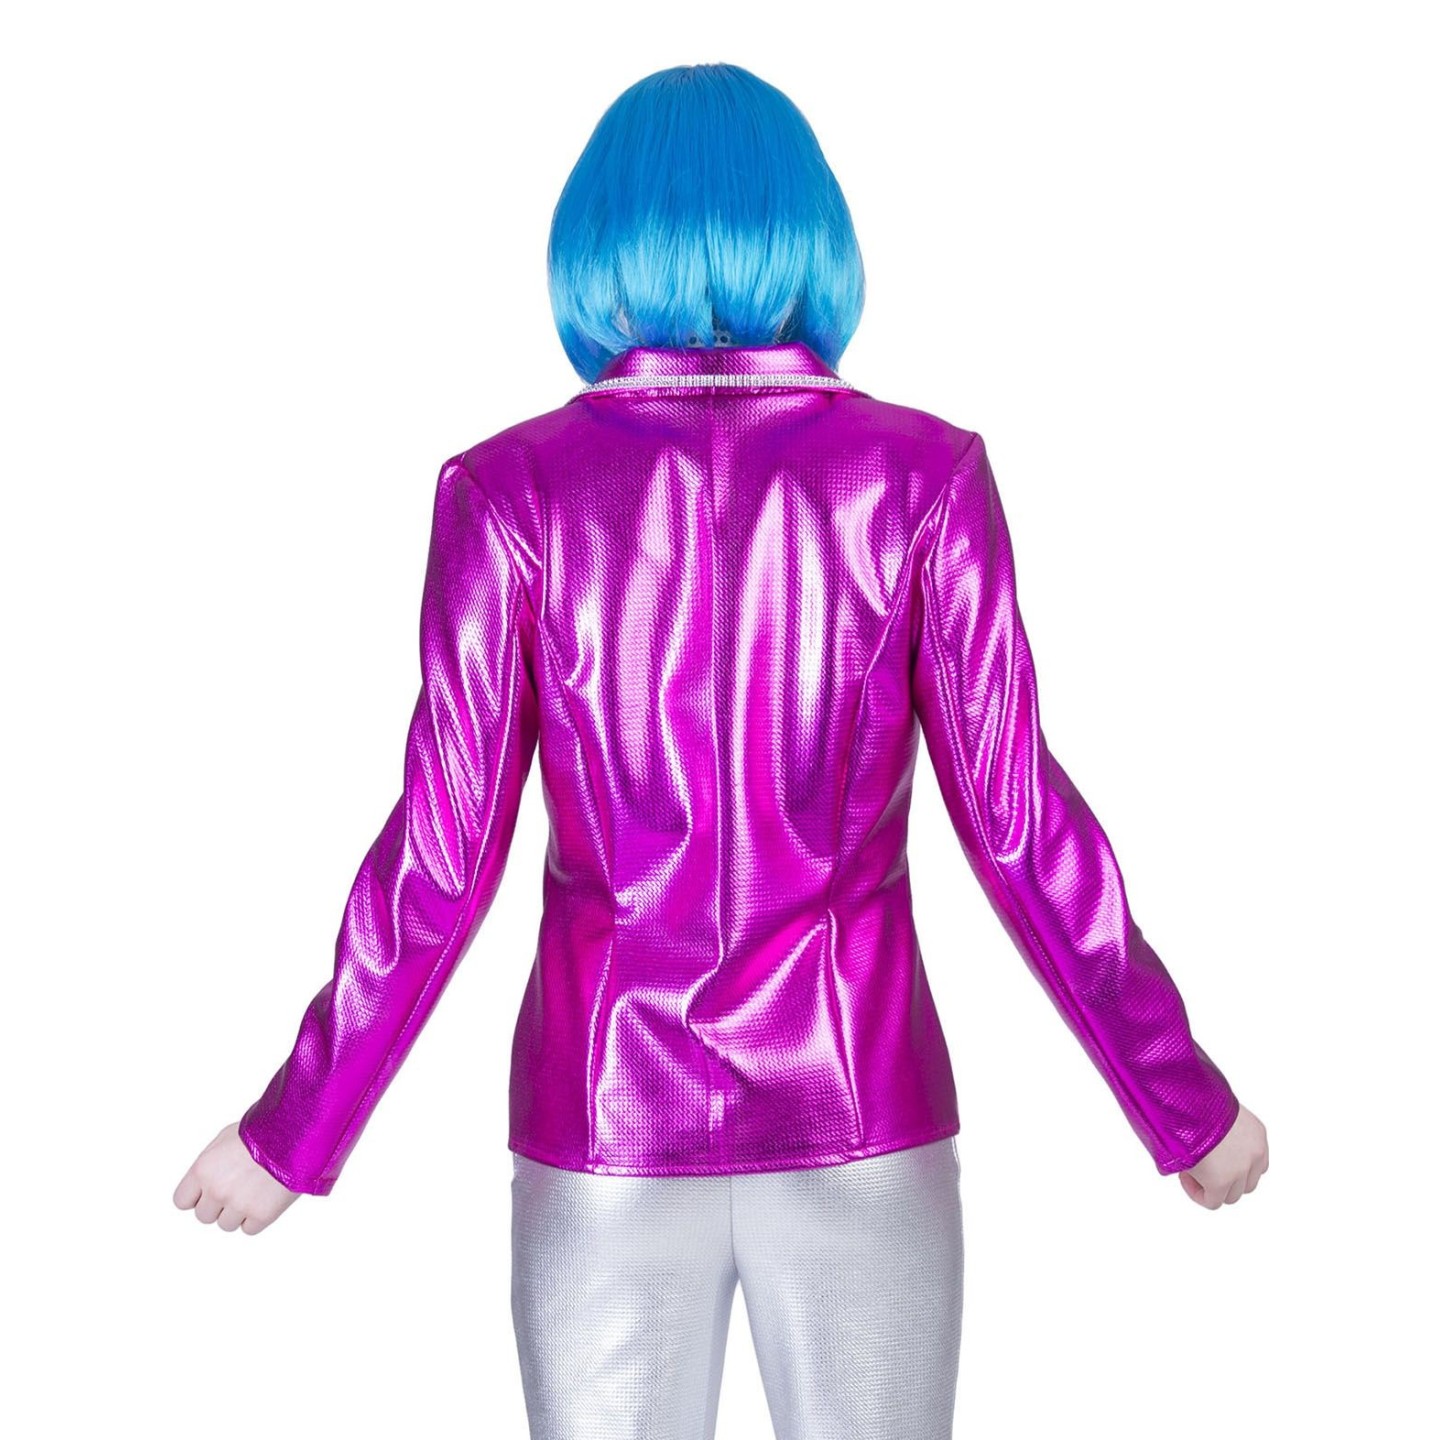 decaan geestelijke Iets Disco jasje dames roze | Jokershop.be - Disco kleding